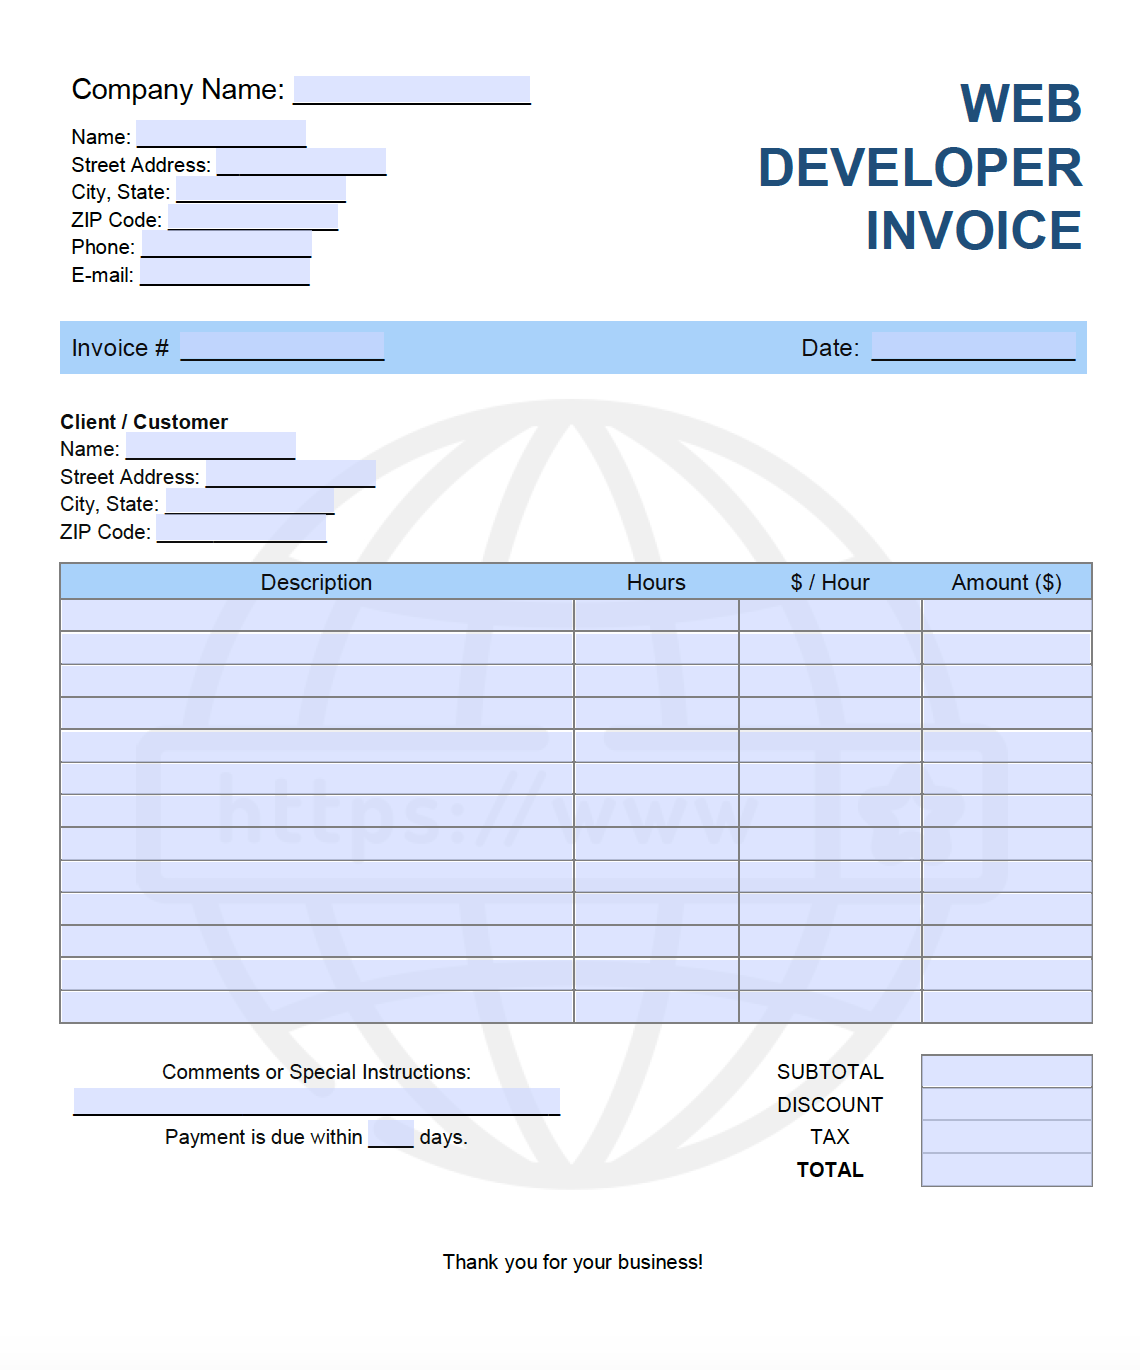 Free Web Developer Invoice Template PDF WORD EXCEL